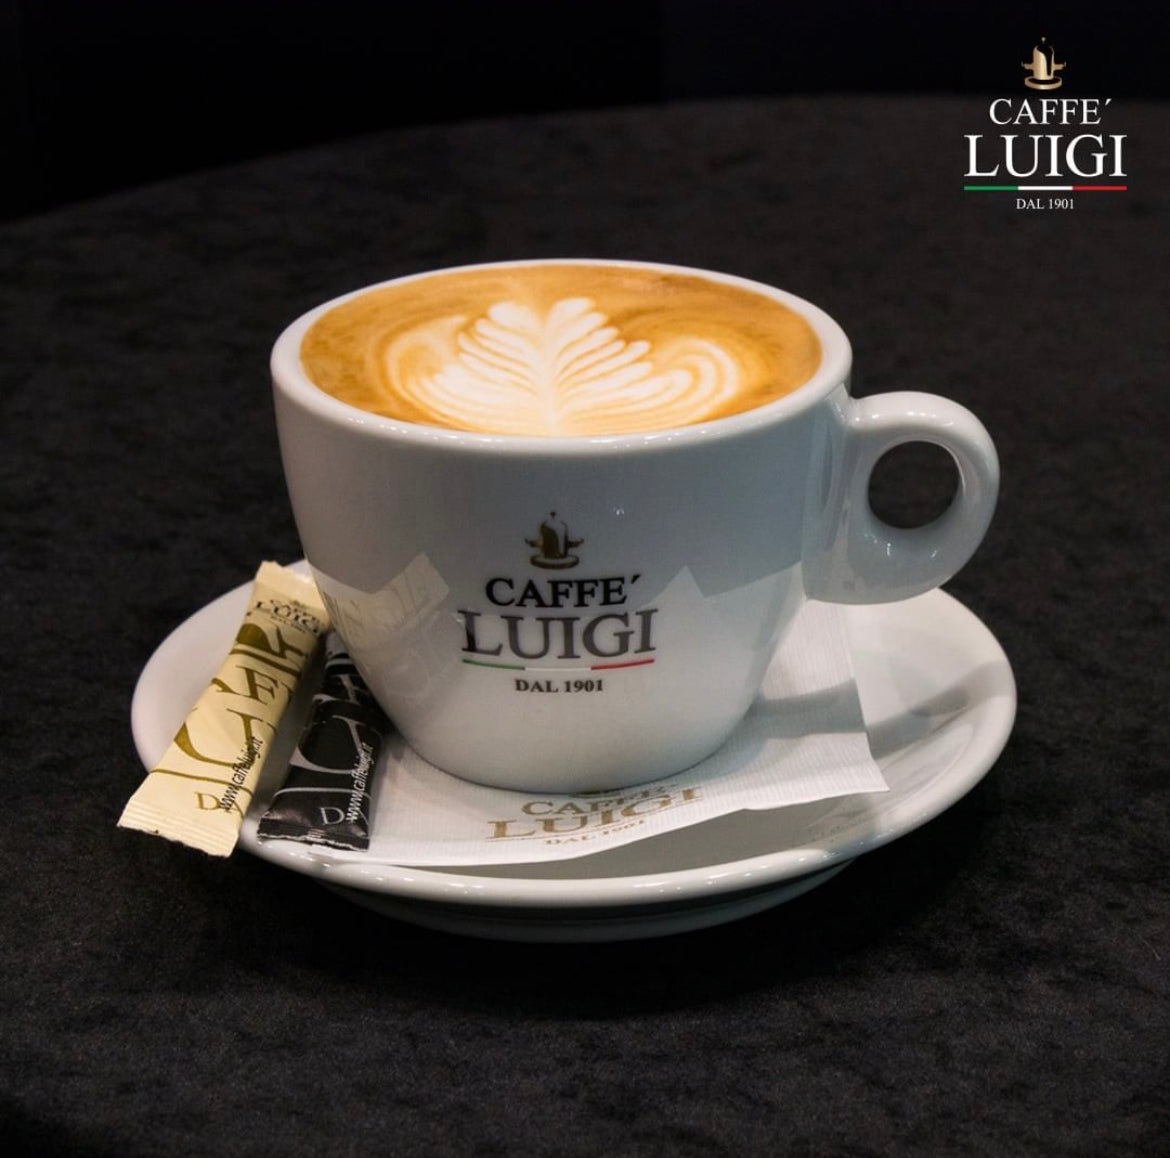 Espresso DOLCE Bohnen Beans 1Kg Caffe 'Luigi 100% Arabica + 1 Cappuccino Tasse Doppelt